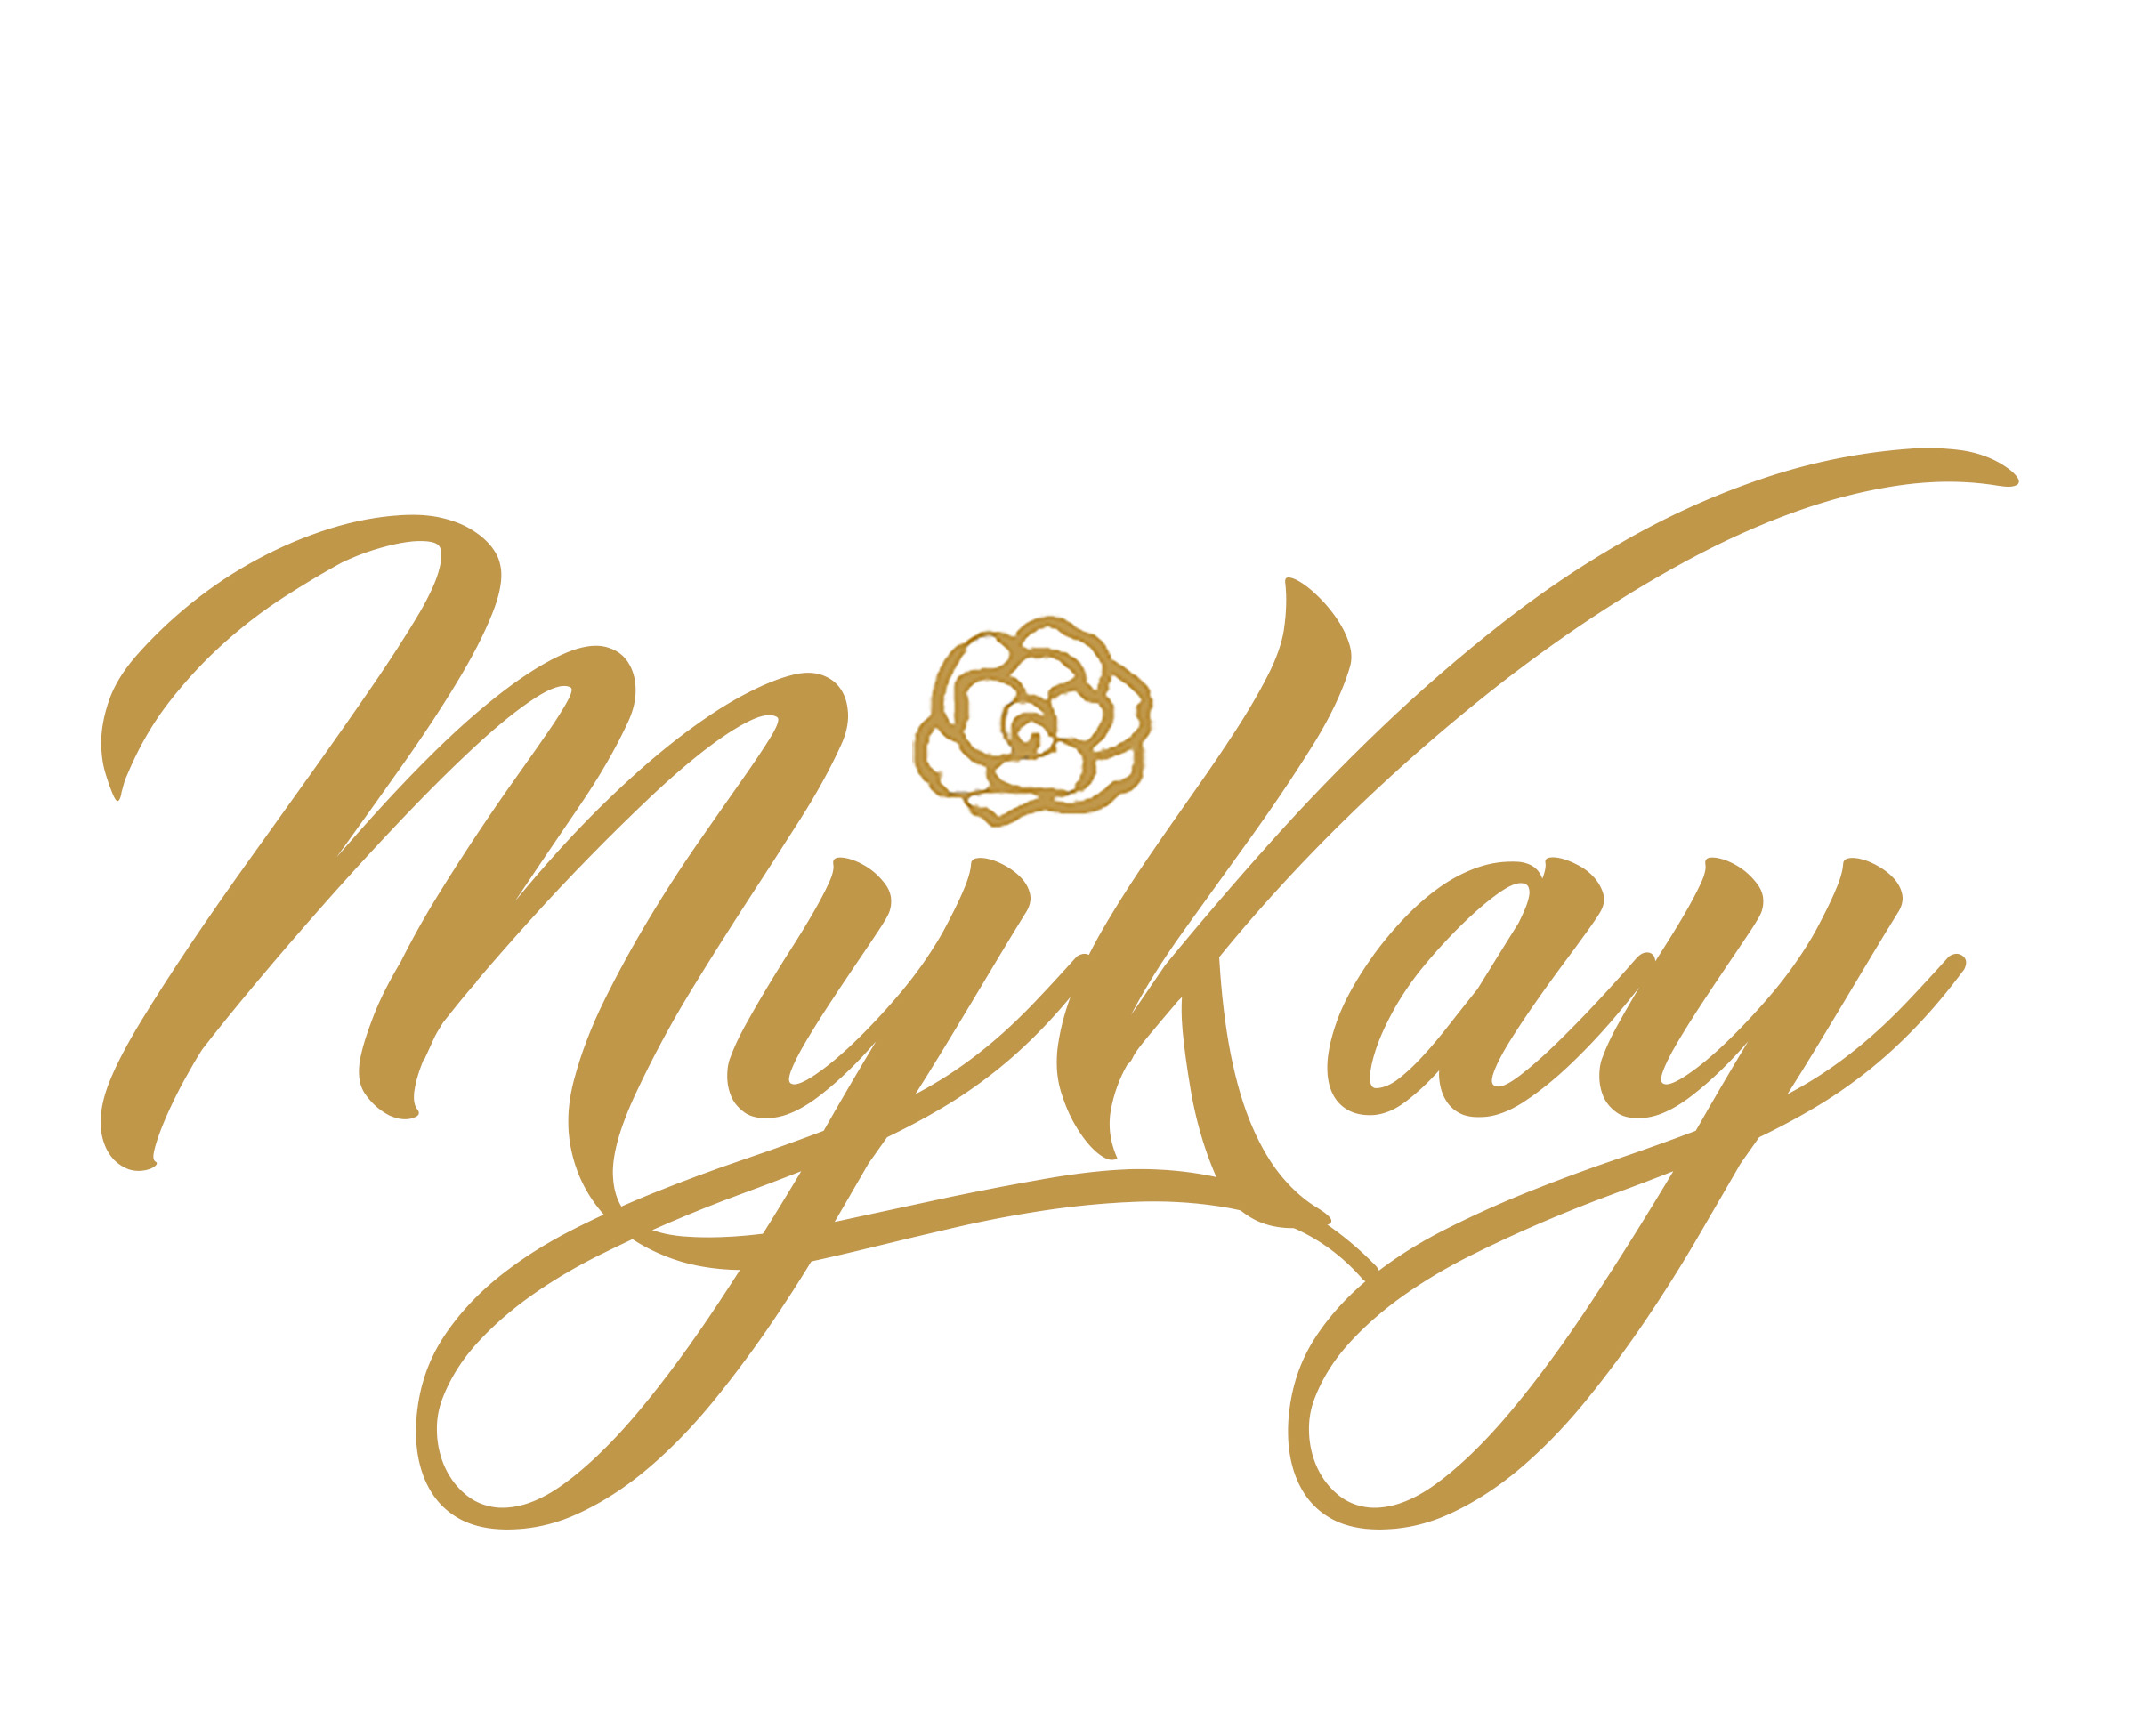 Adjustable Luxury Swarovski Crystal Semi-Bangle – MyKay Jewelry